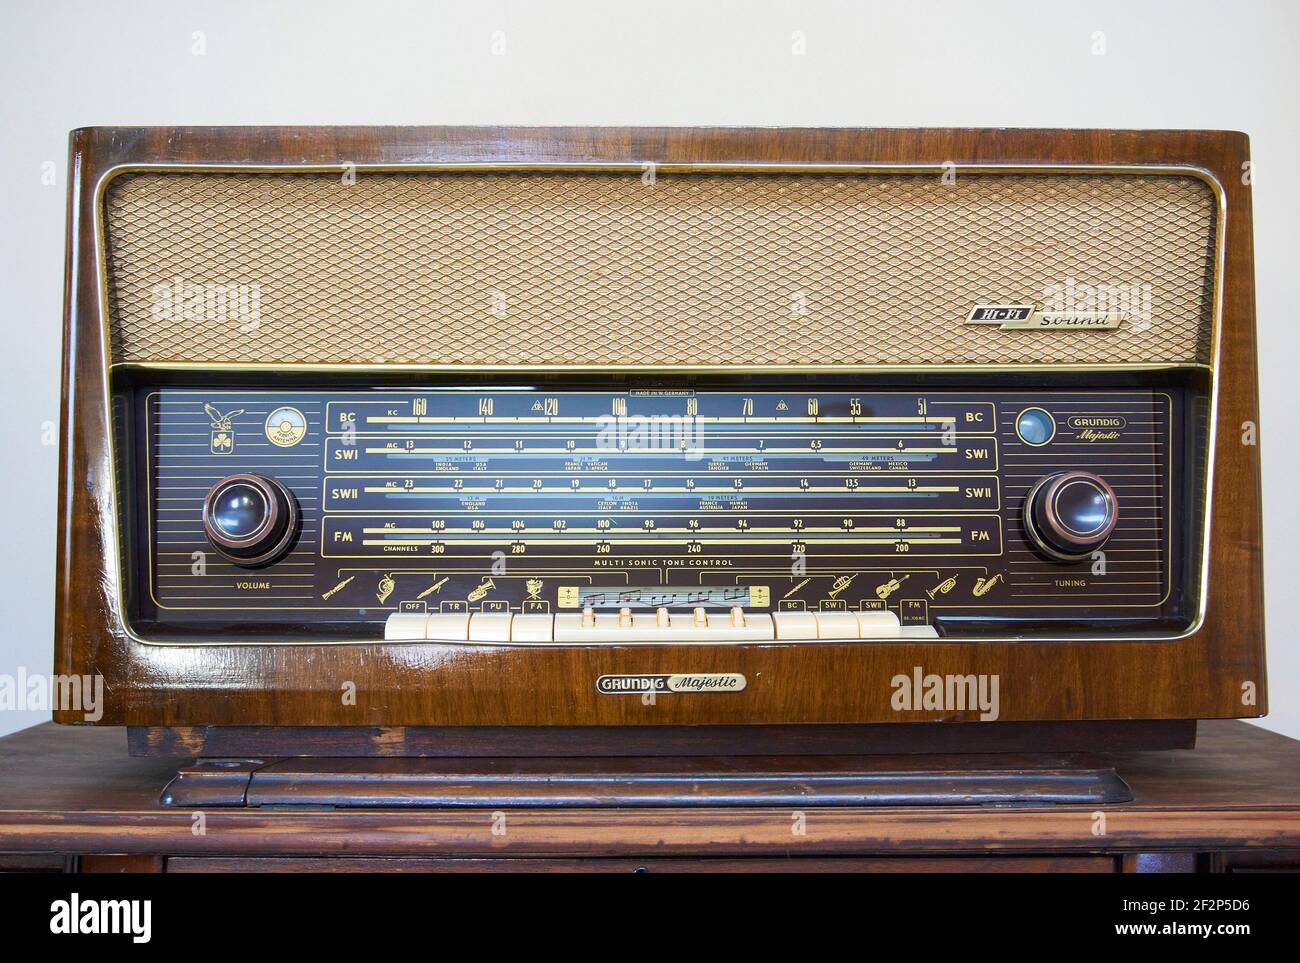 Radio Grundig antica Foto stock - Alamy